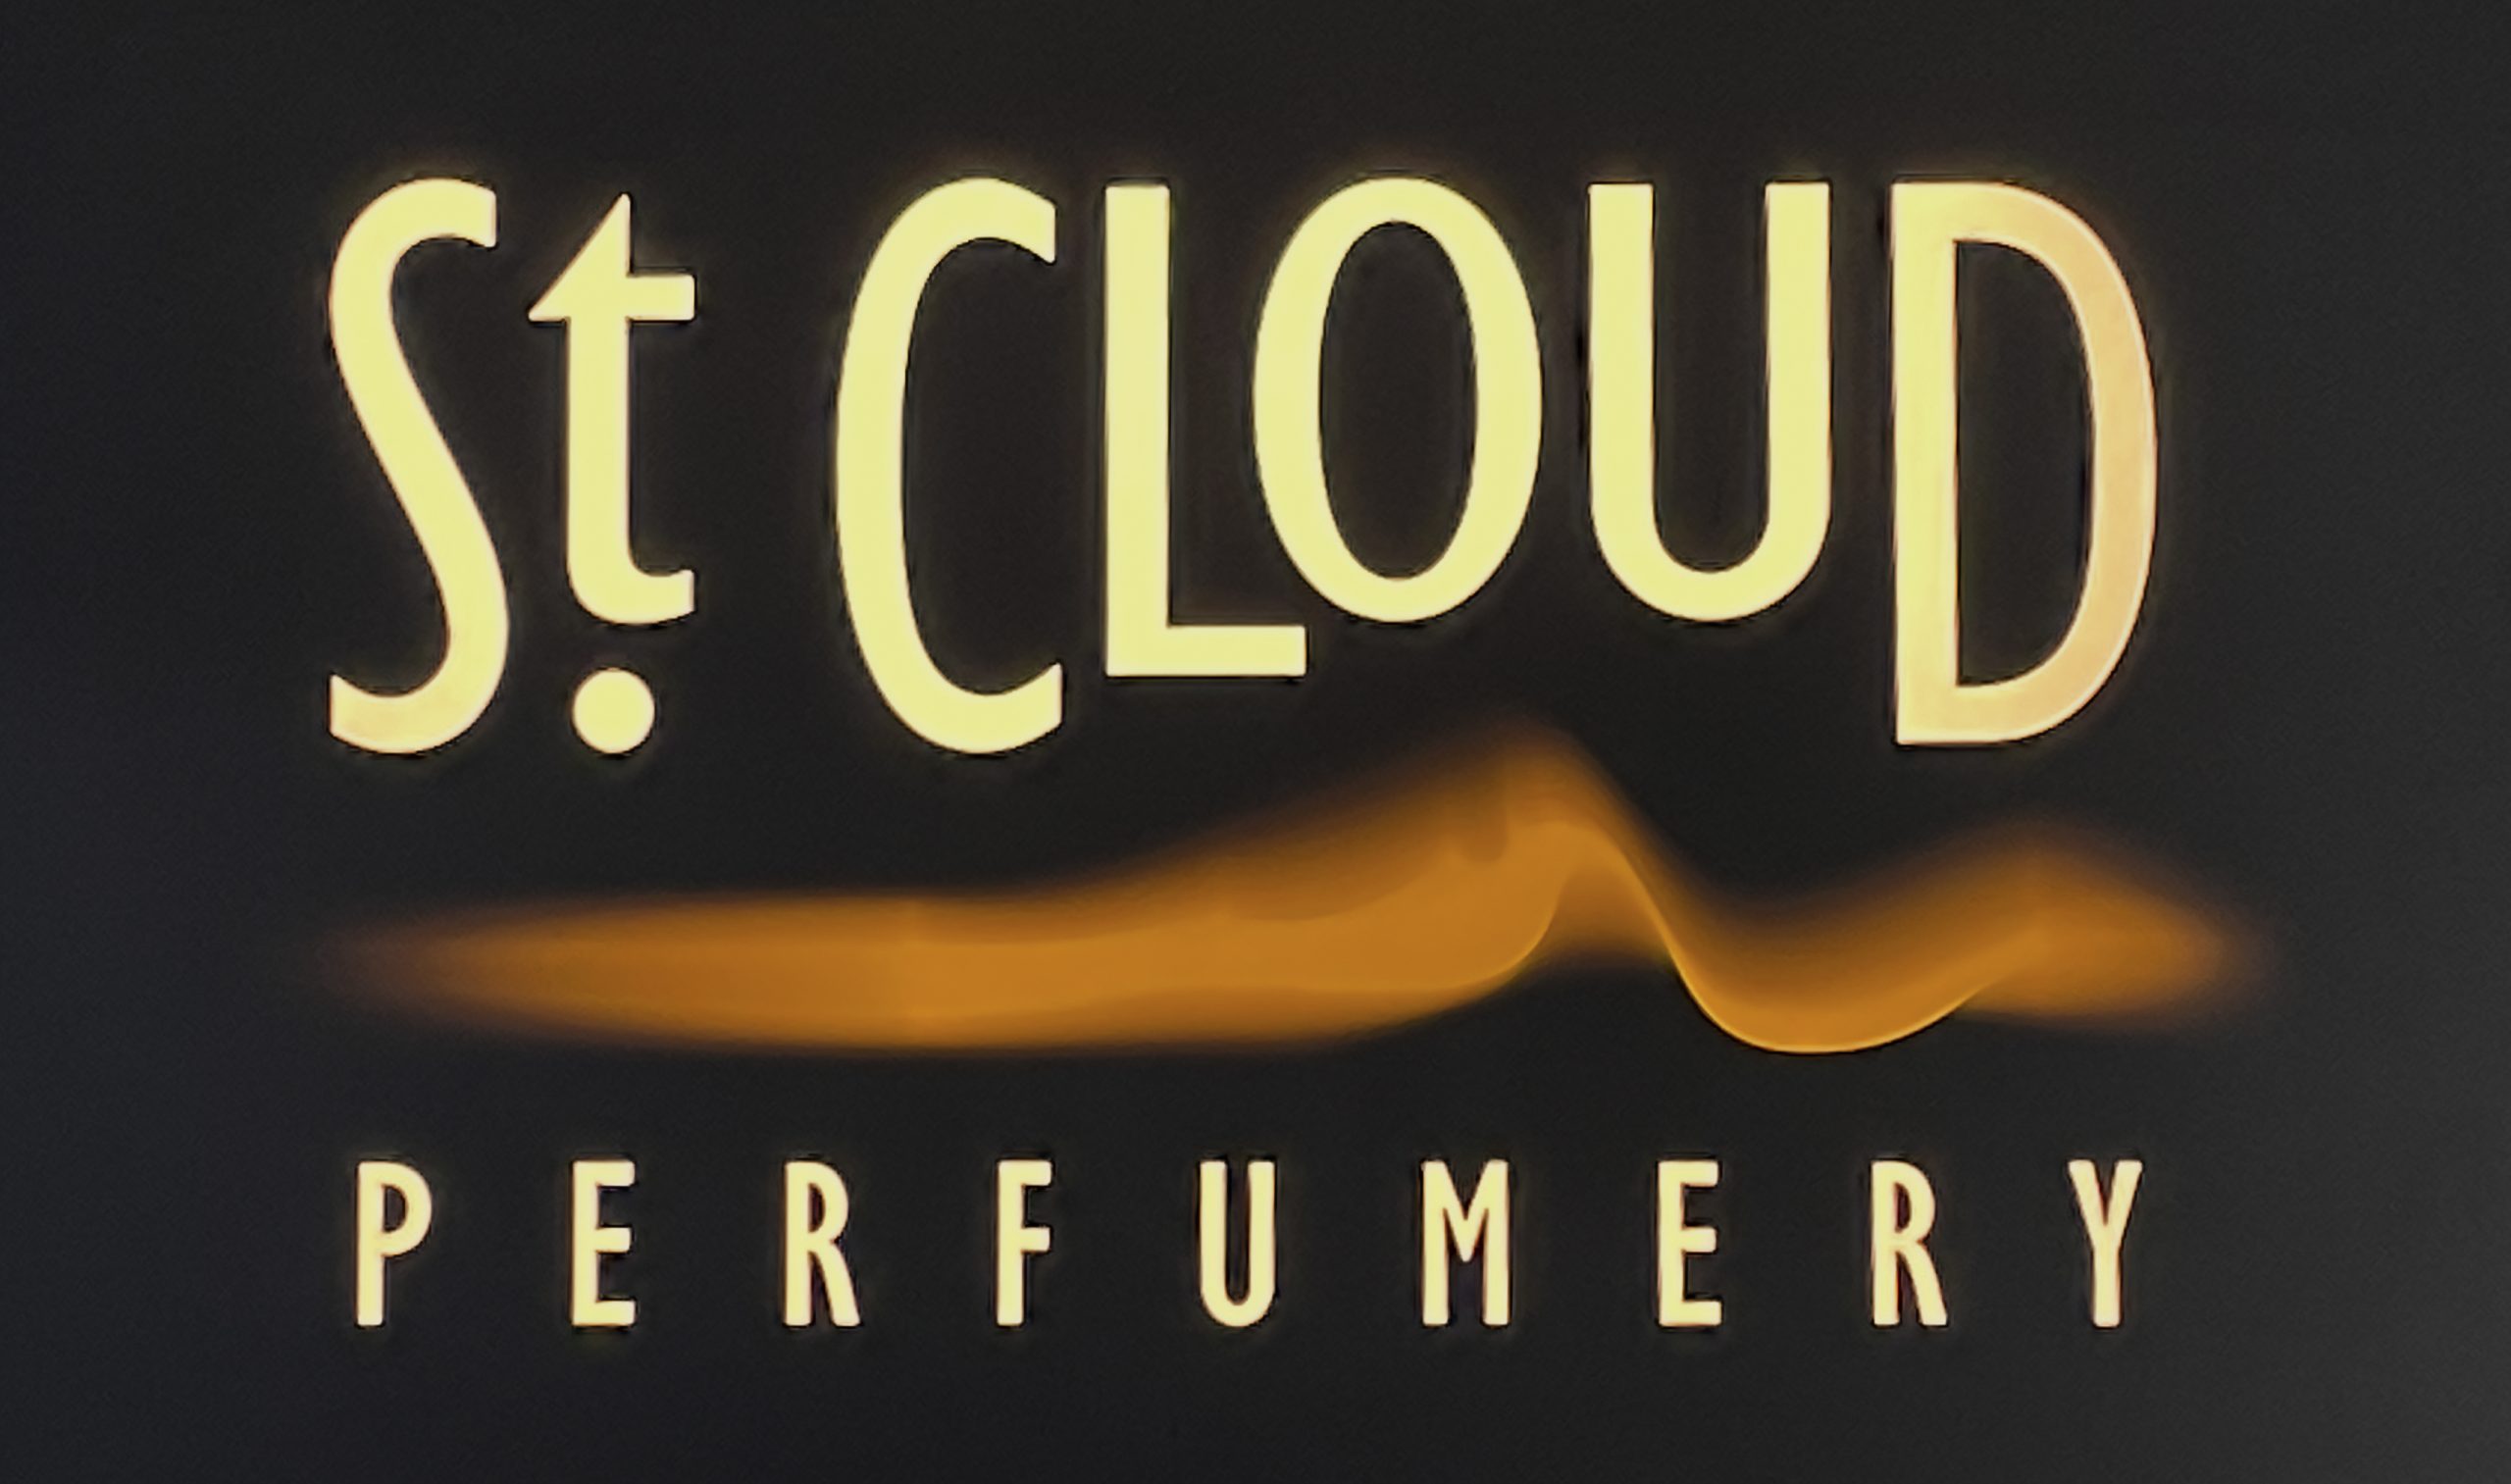 Centrepoint St Cloud Perfumery